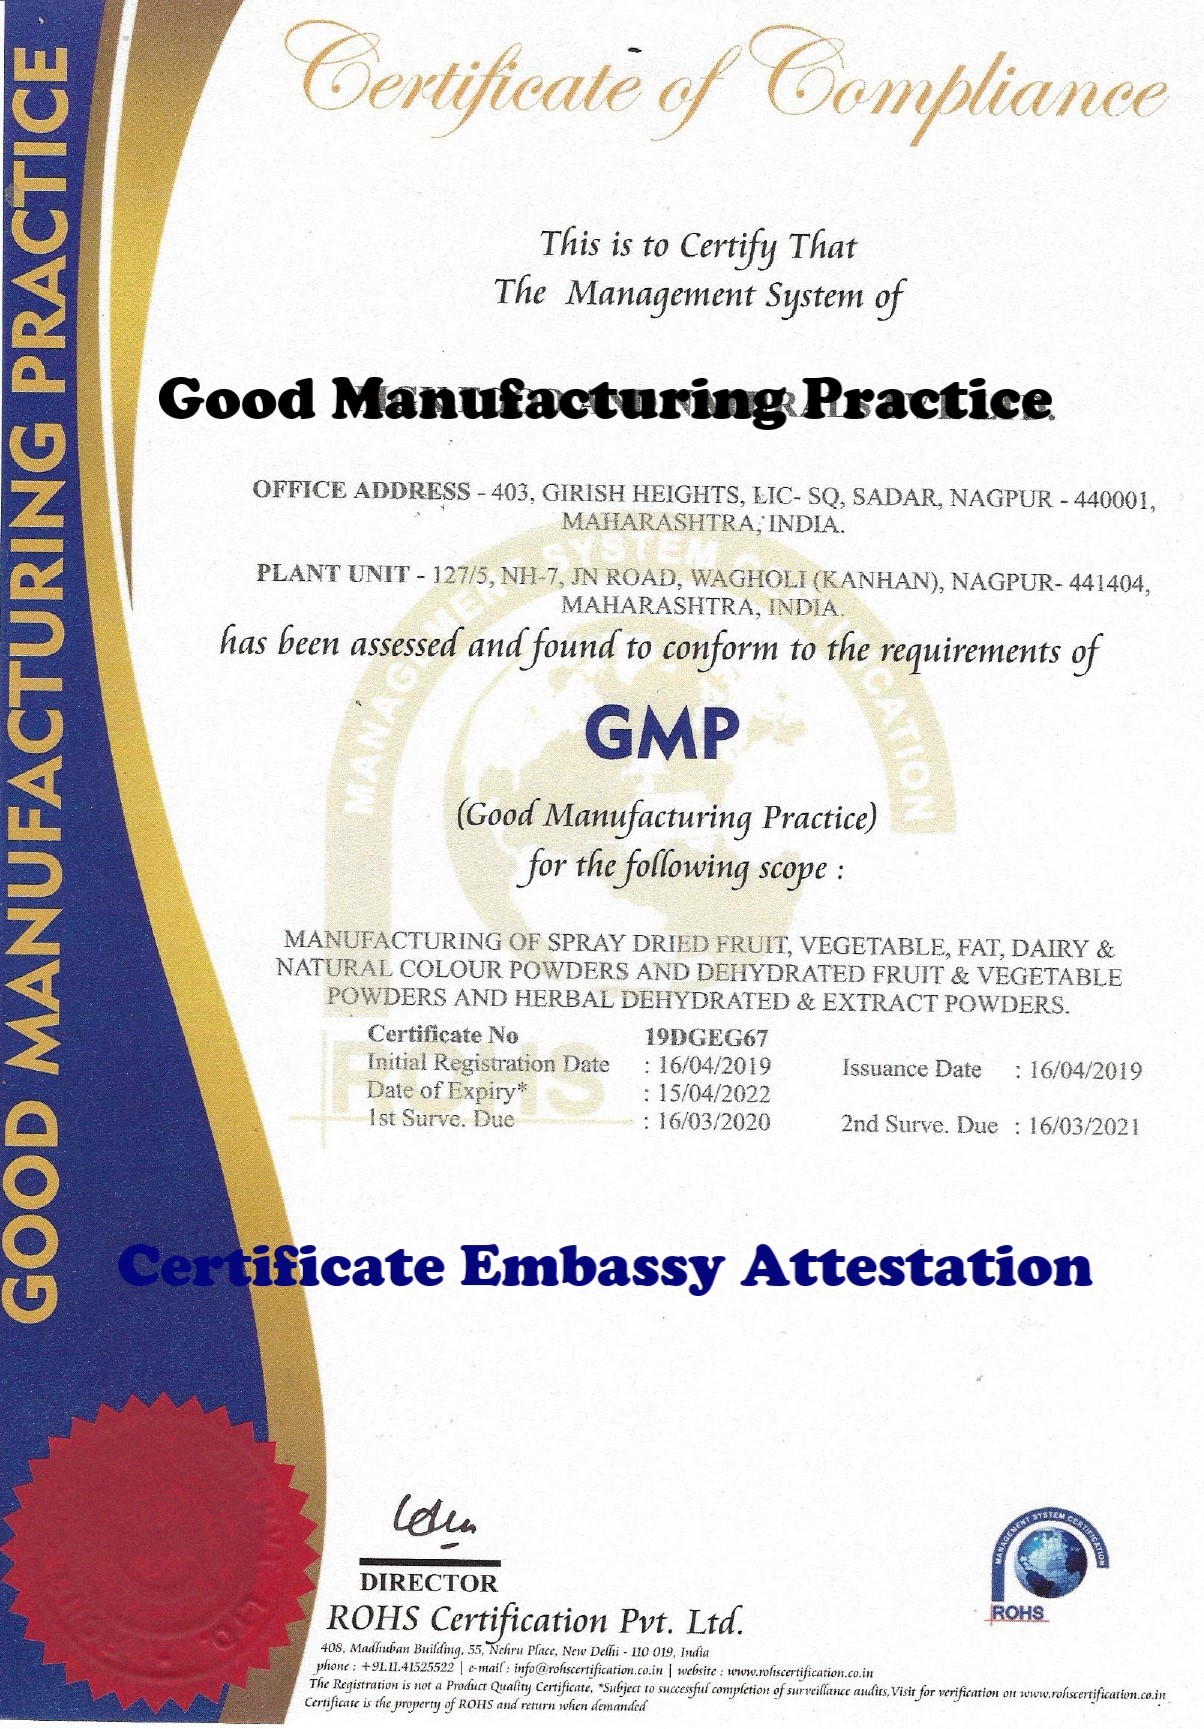 GMP Certificate Attestation from Czechoslovakia Embassy